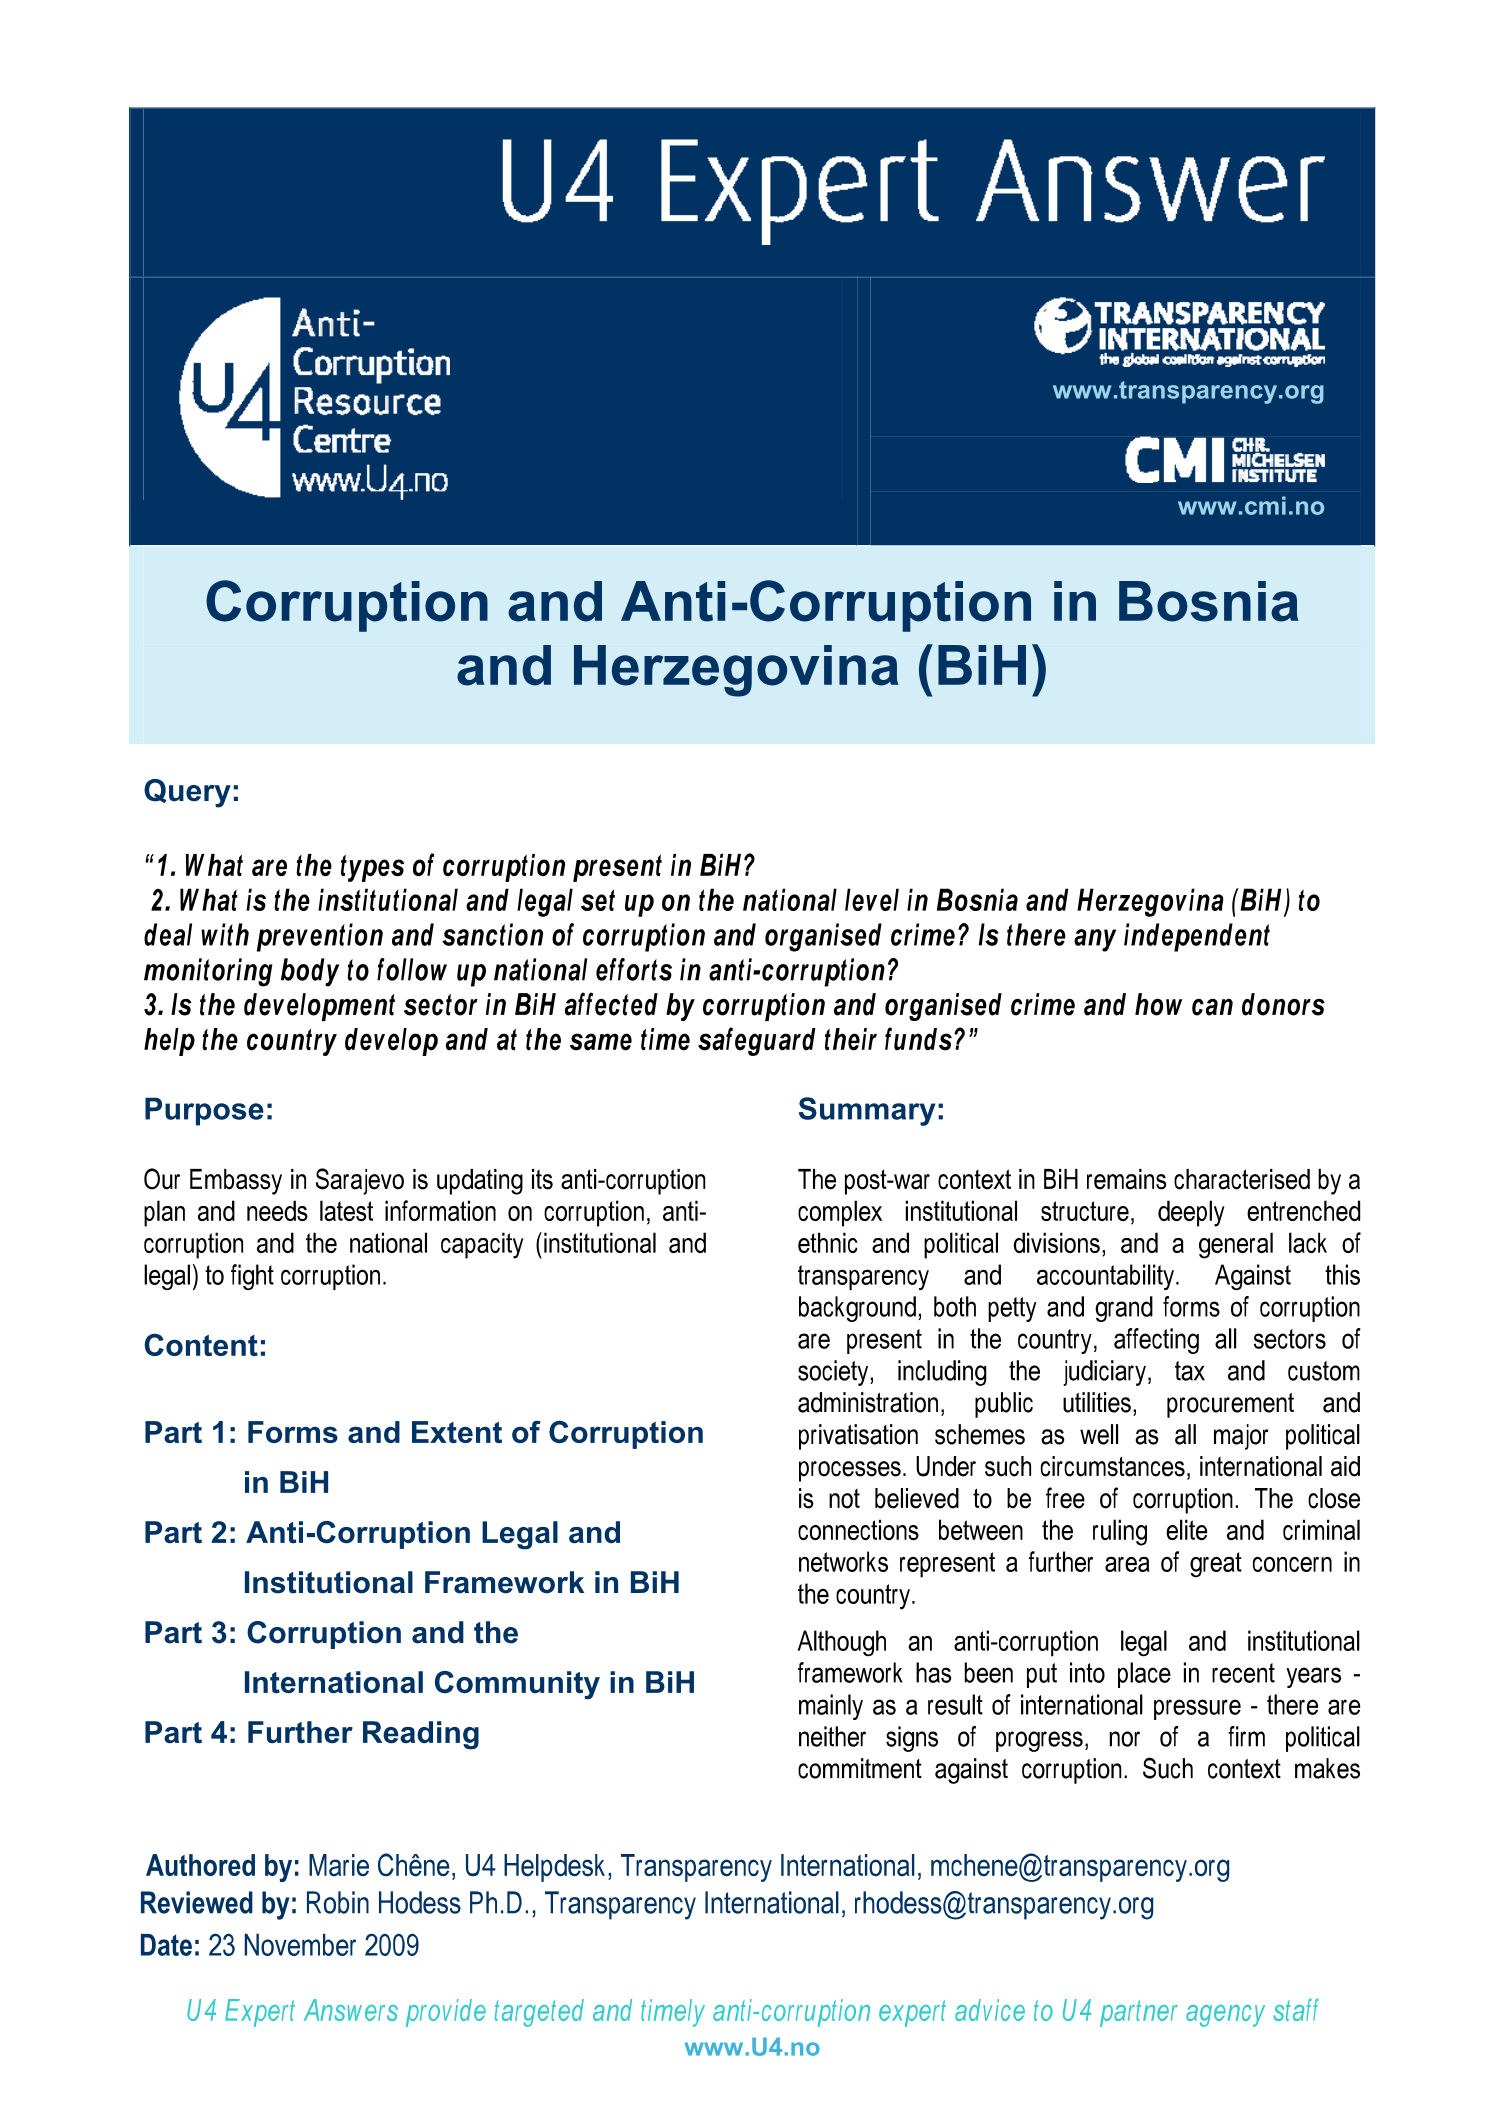 Corruption and Anti-Corruption in Bosnia and Herzegovina (BiH) 